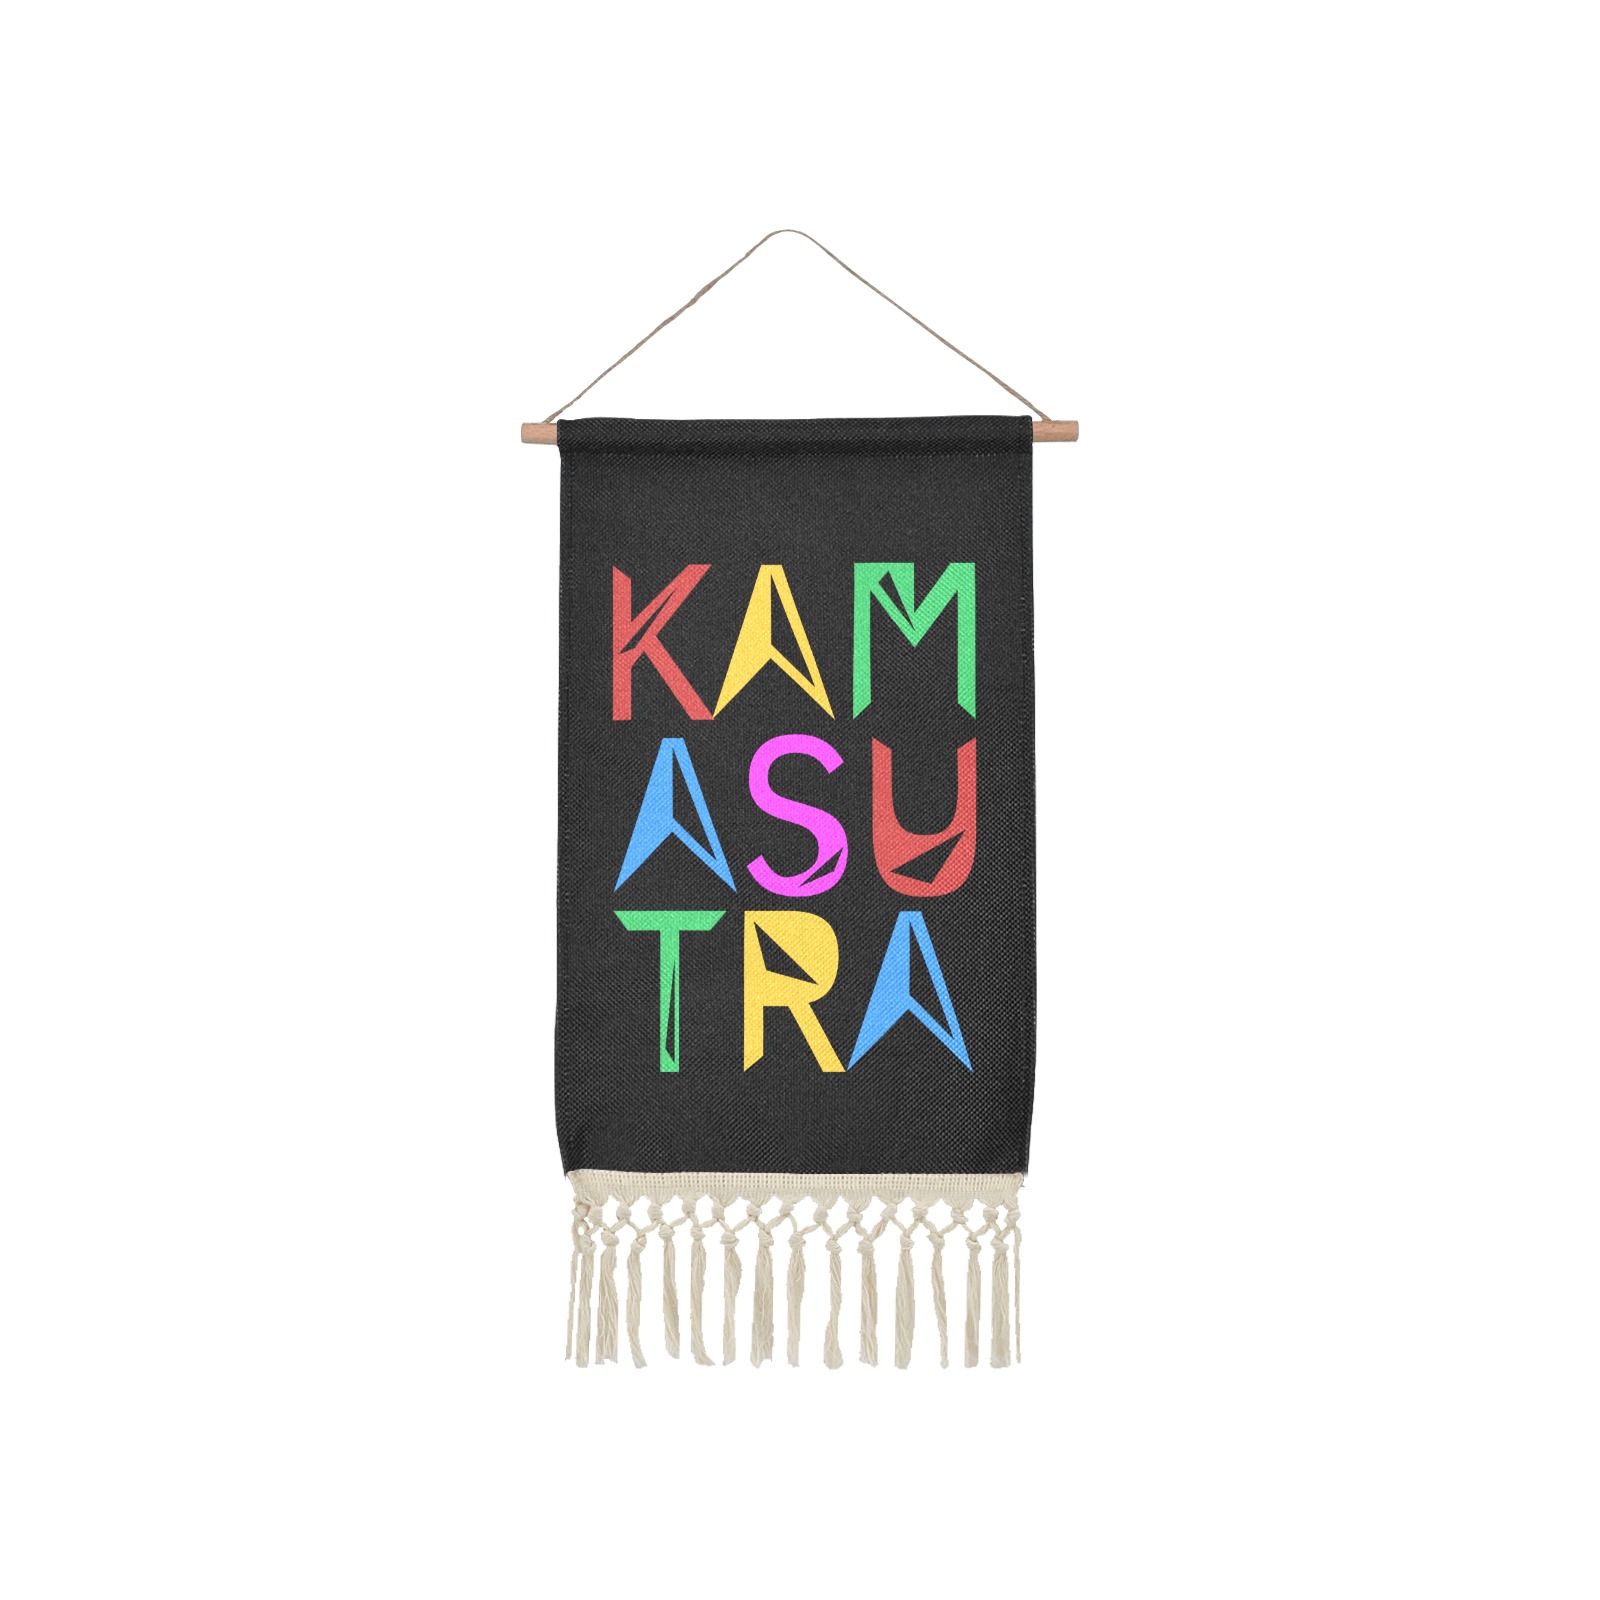 Kamasutra elegant colorful text typography art. Linen Hanging Poster